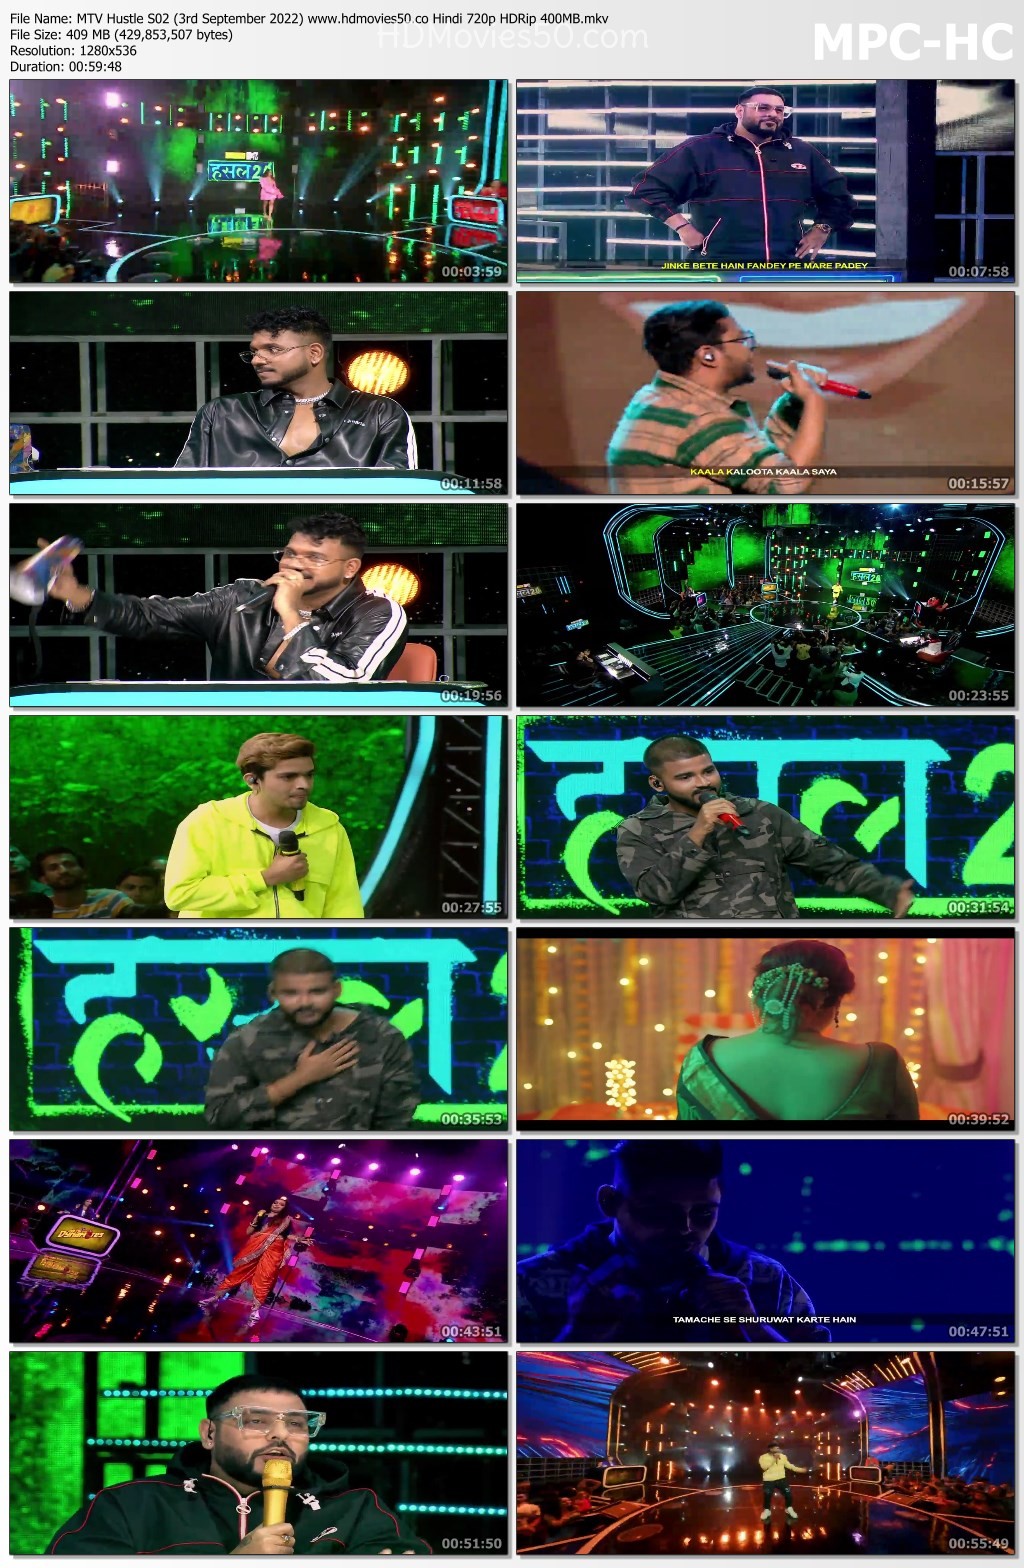 MTV Hustle S02 3rd September 2022 www.hdmovies50.co Hindi 720p HDRip 400MB.mkv thumbs